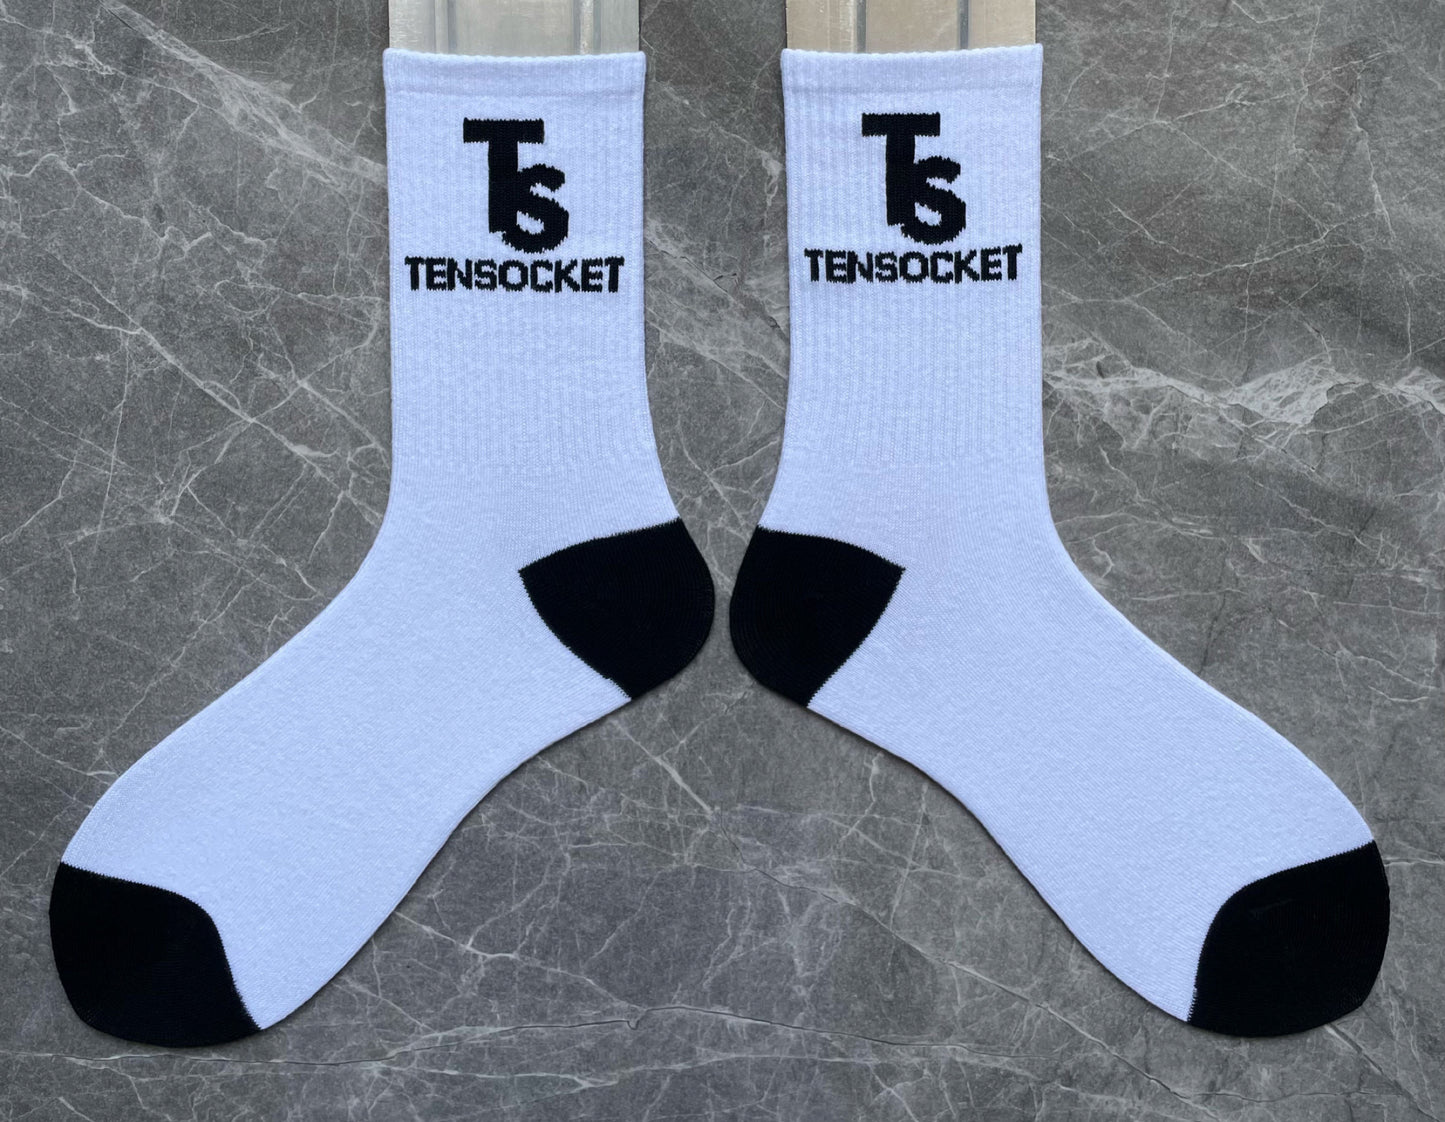 Tensocket Socks Fall